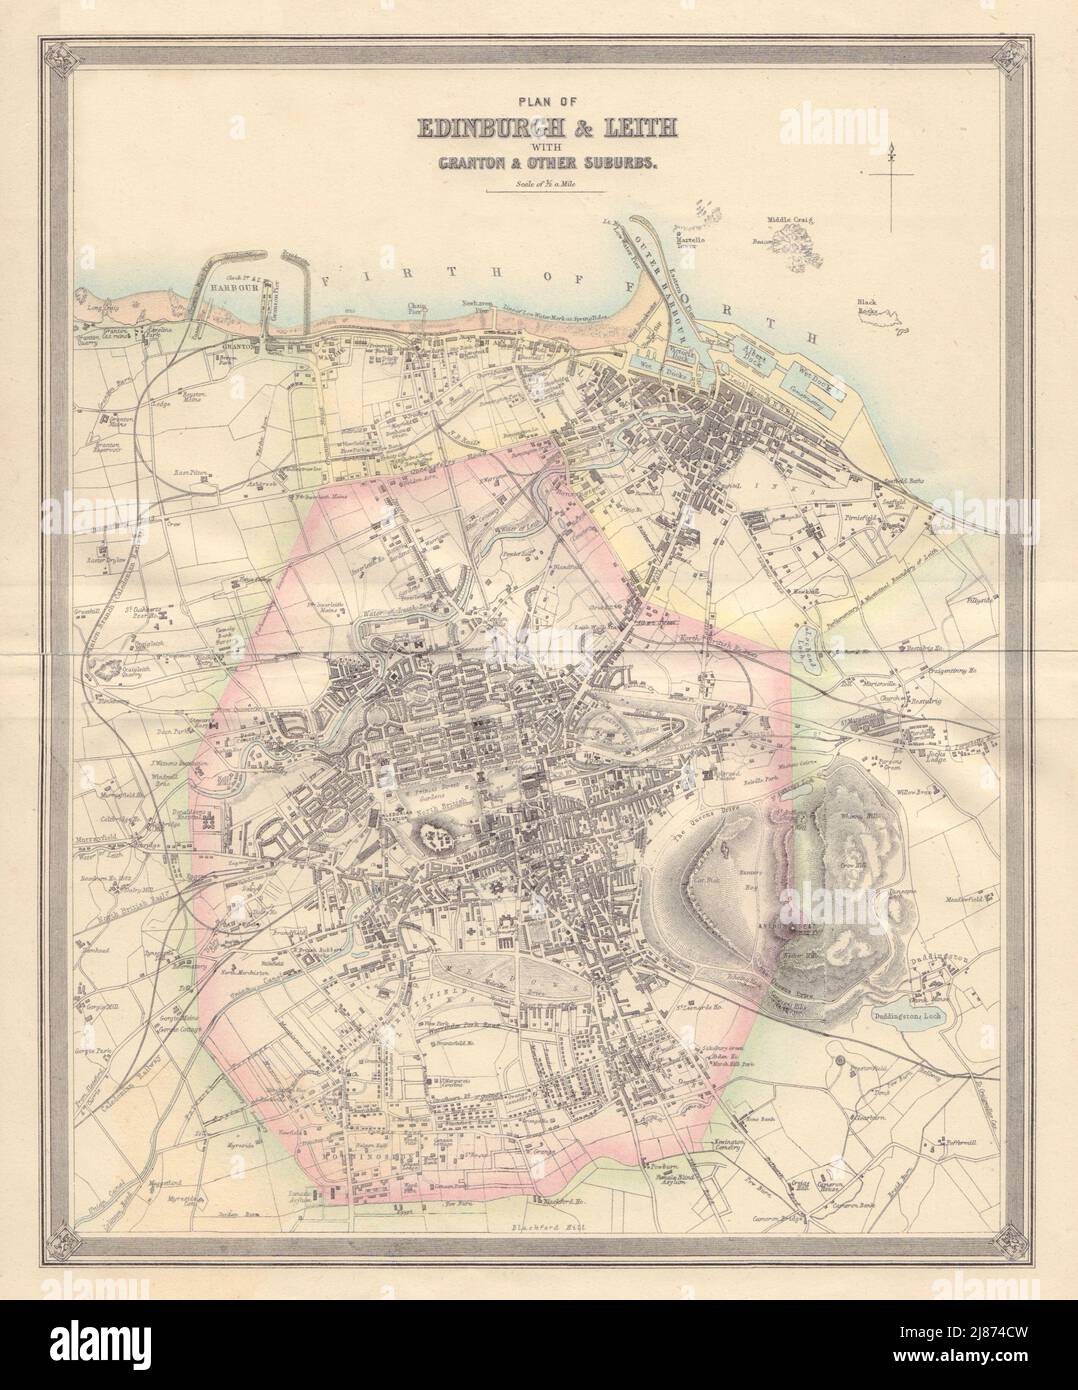 Large antique EDINBURGH & LEITH town/city plan 45 x 55 cm LARGE 1912 old map 